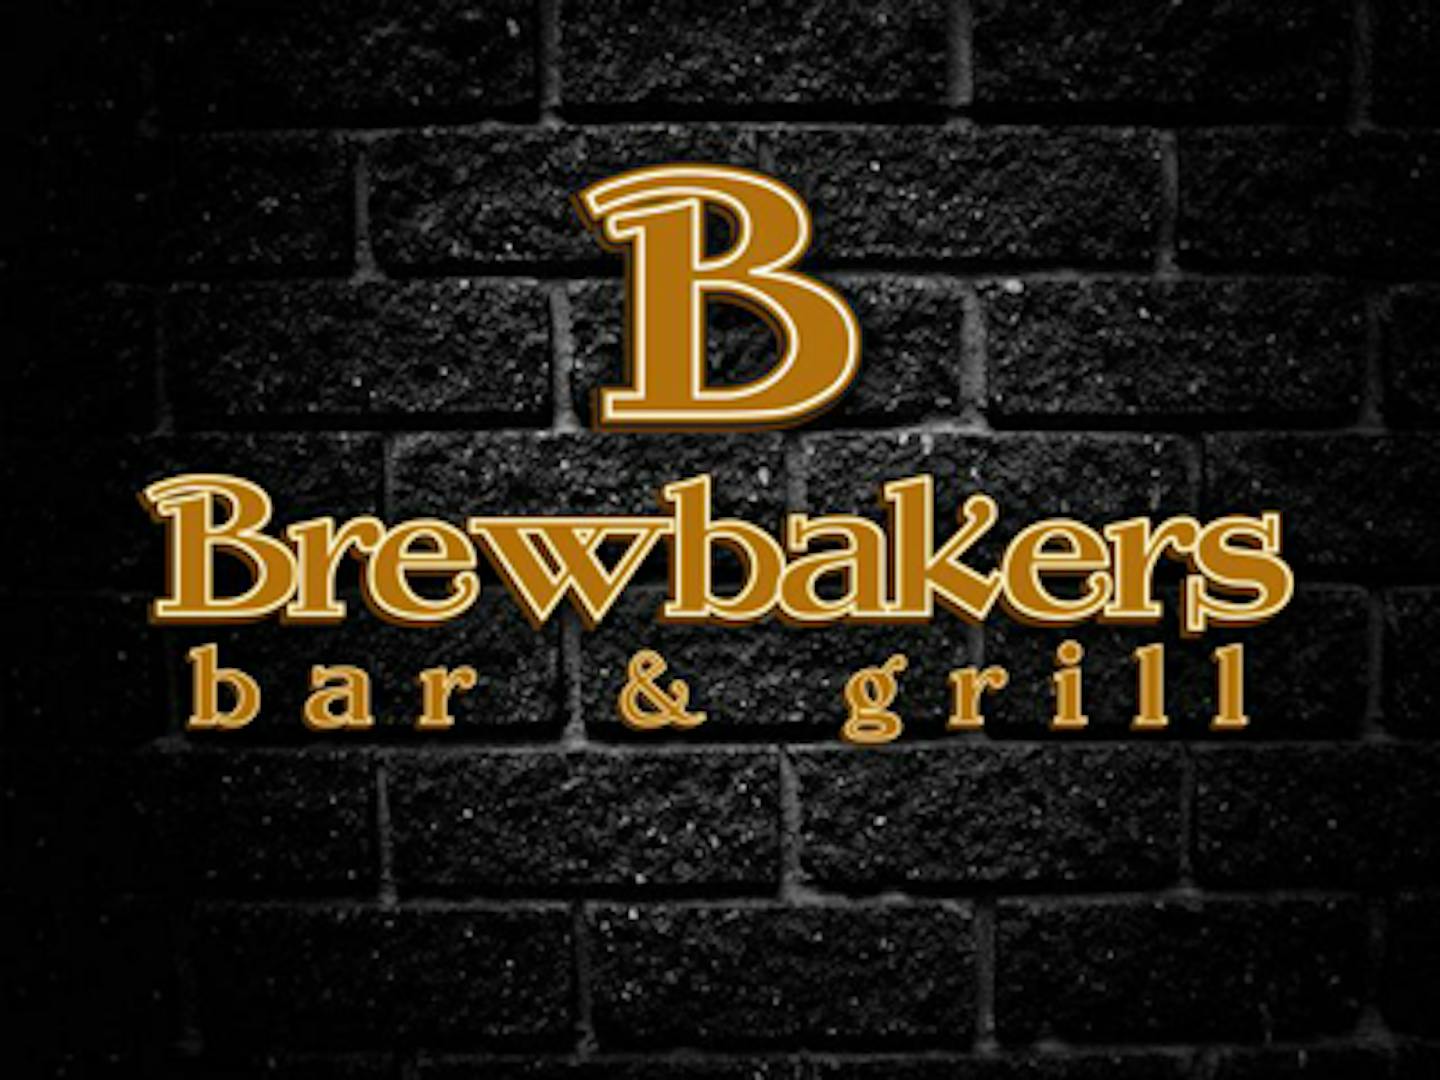 Brewbaker's Bar & Grill